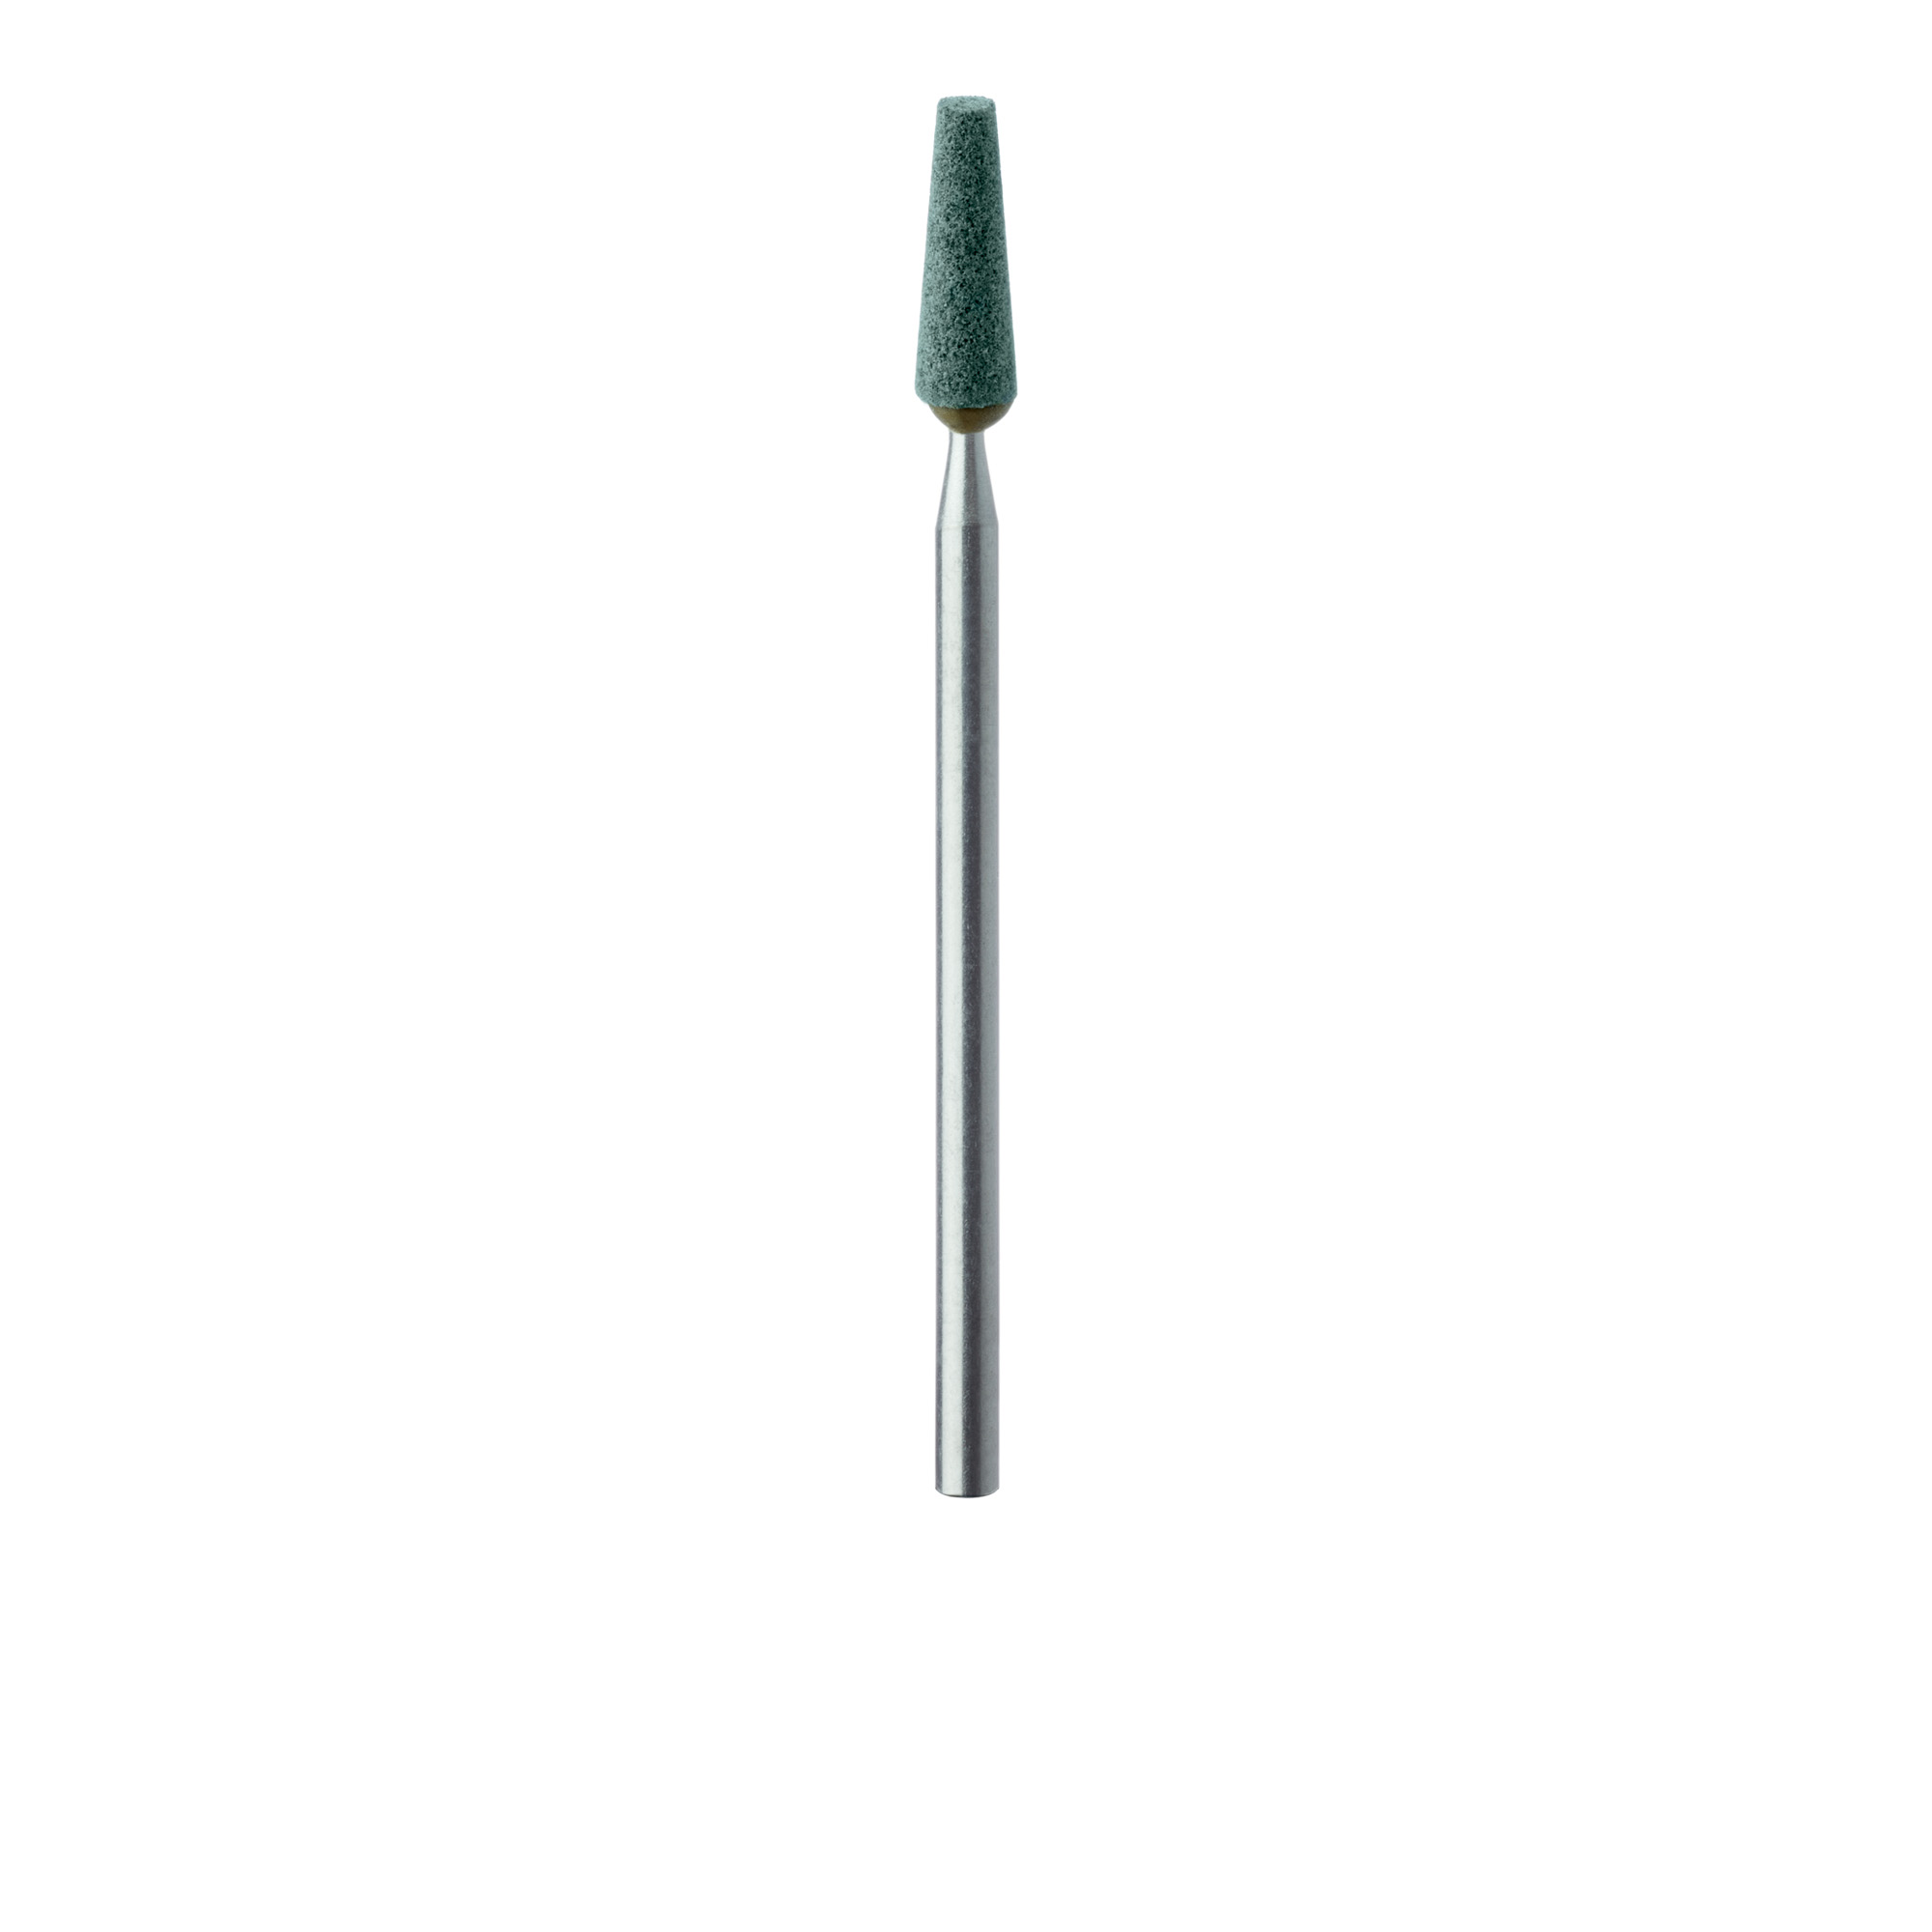 652-035-HP-GRN Abrasive, Green, Tapered Flat End, 3.5mm Ø, Medium, HP